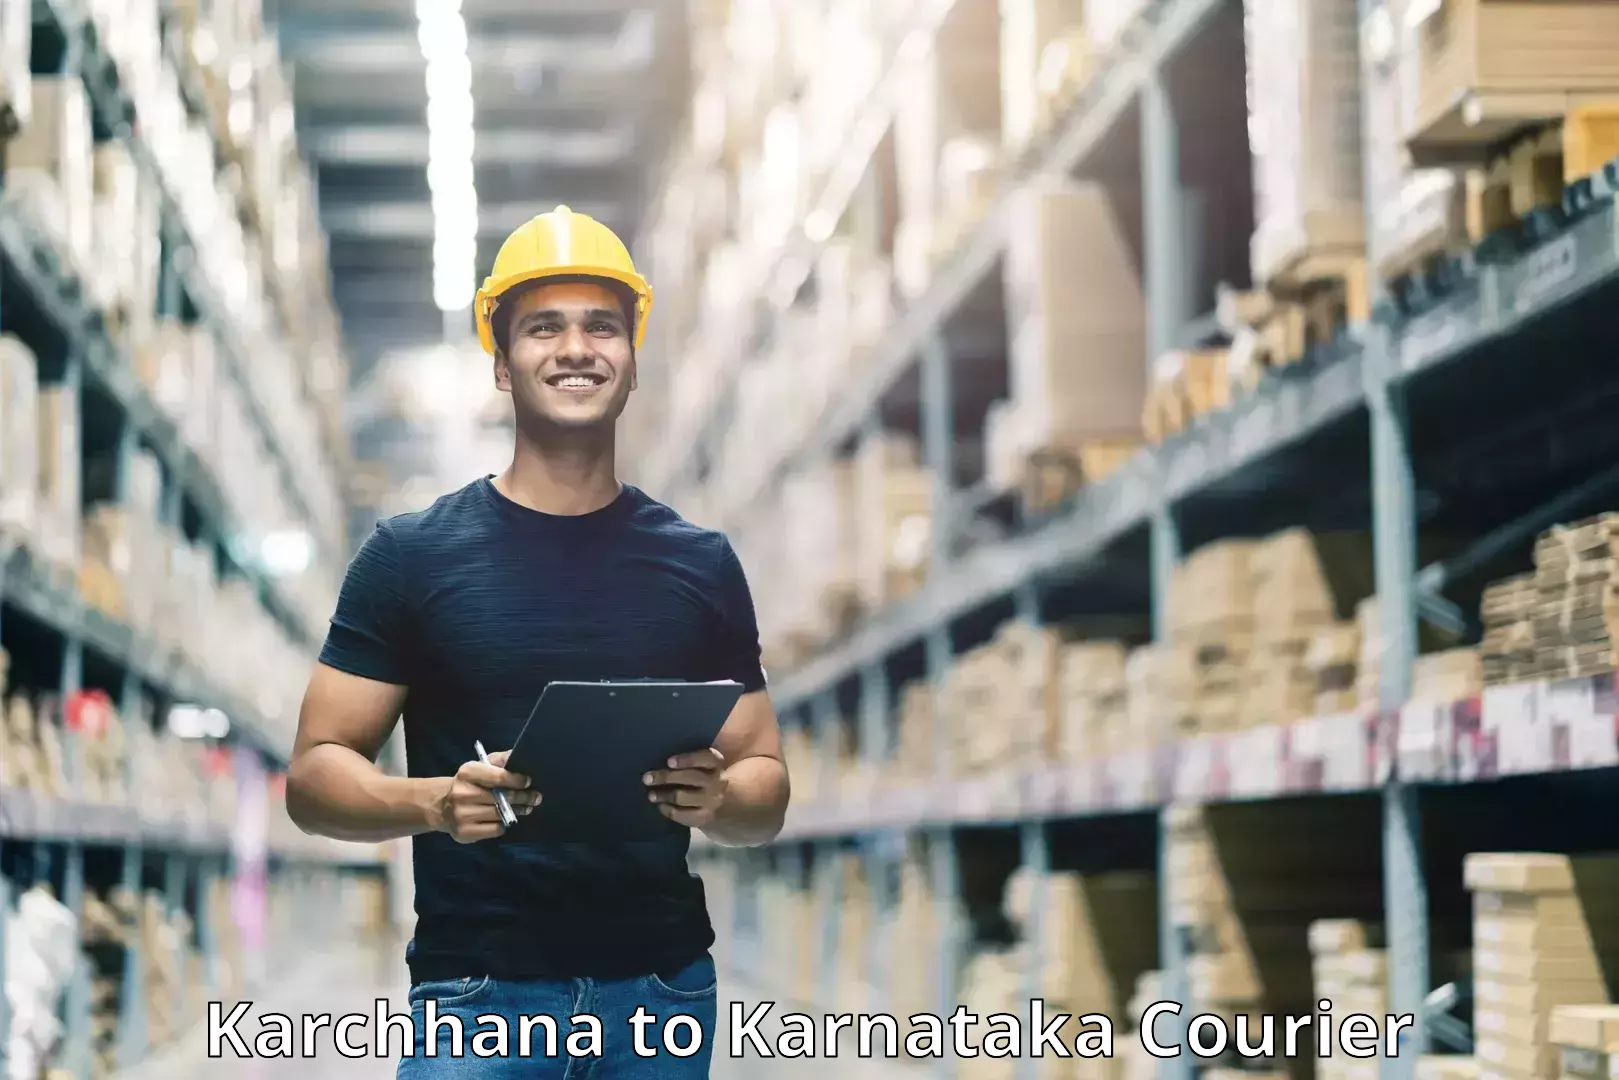 Supply chain efficiency Karchhana to Eedu